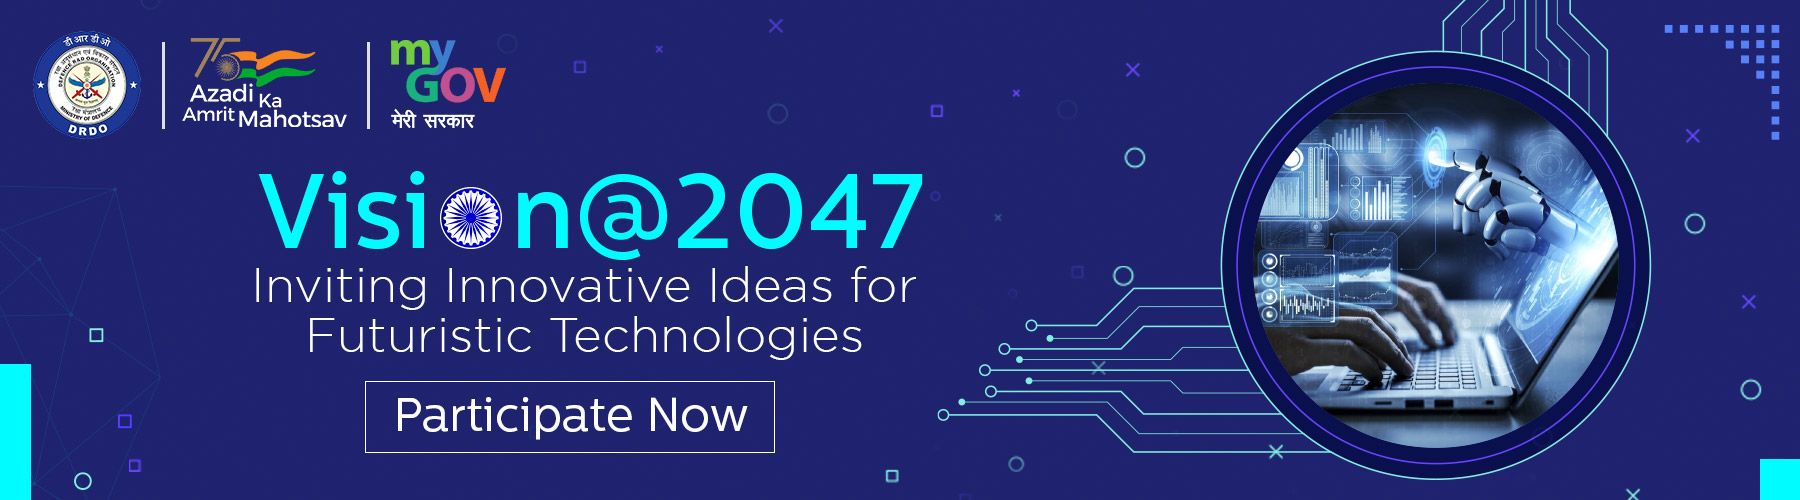 Inviting Innovative Ideas for Futuristic Technologies